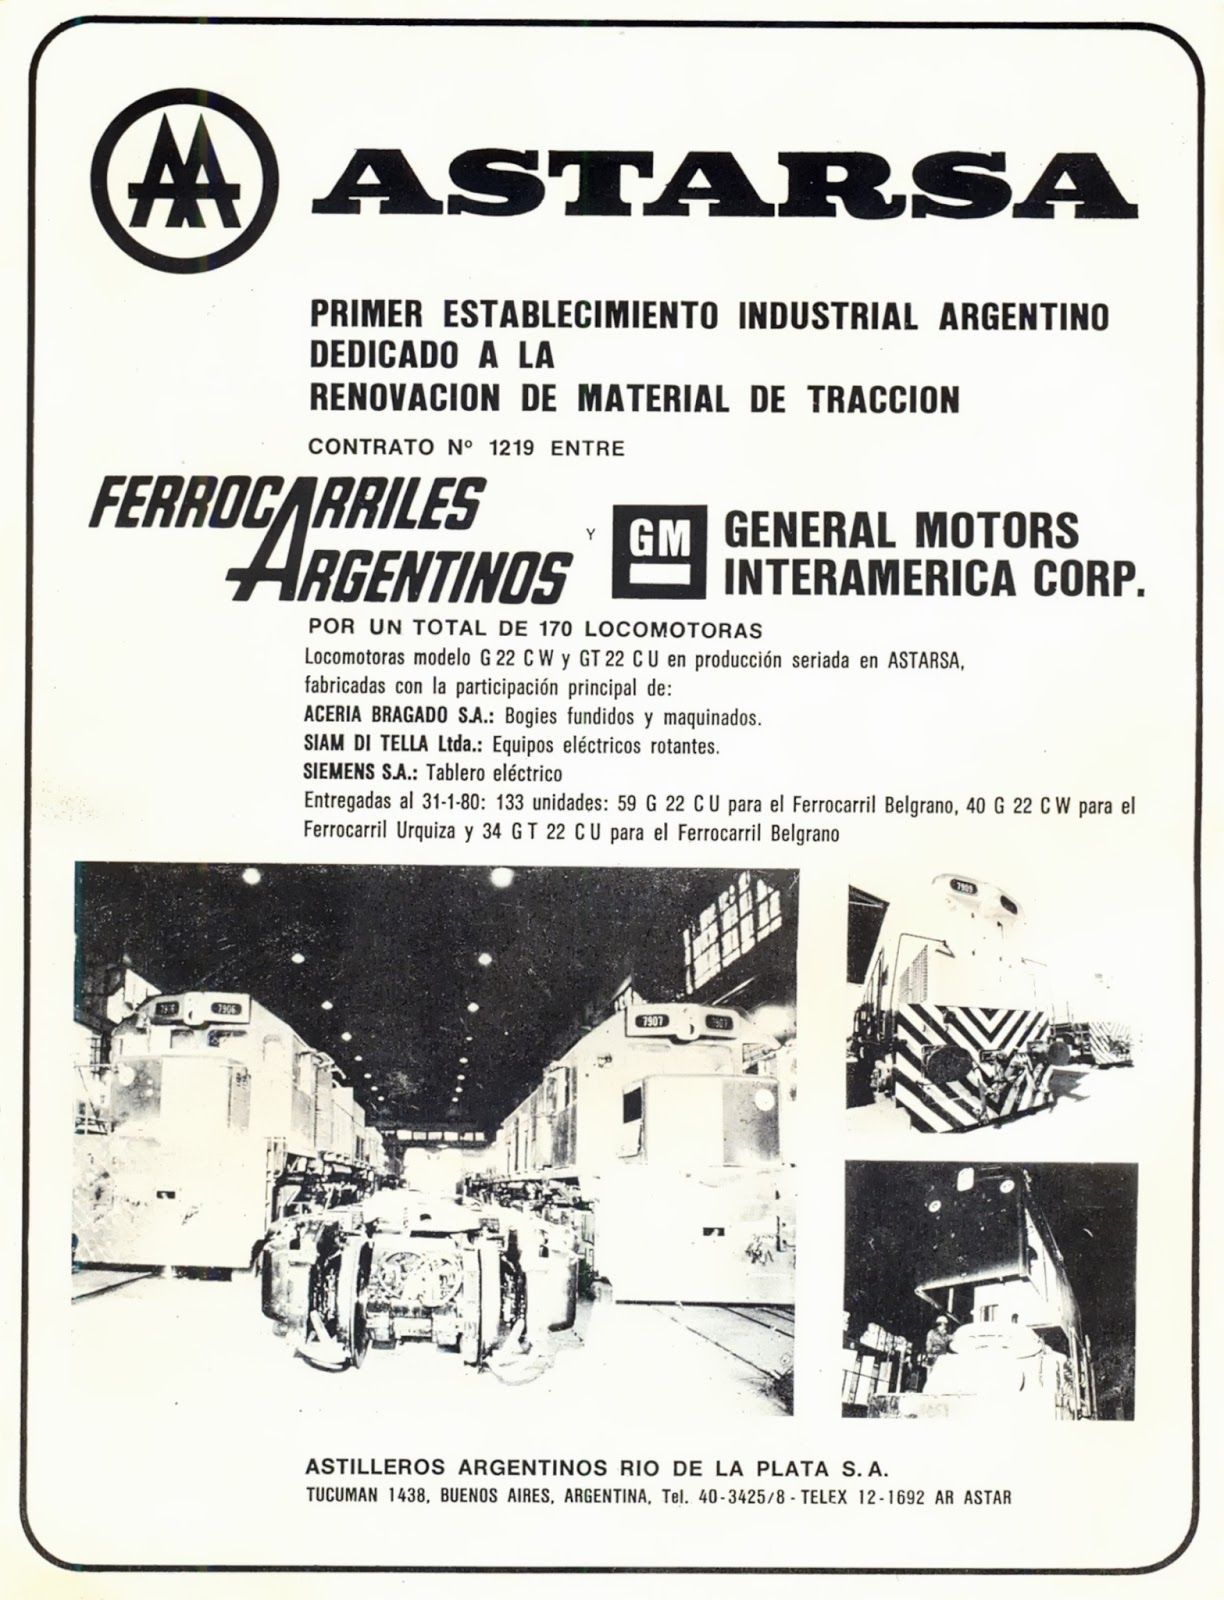 ASTARSA Ferrocarriles Argentinos